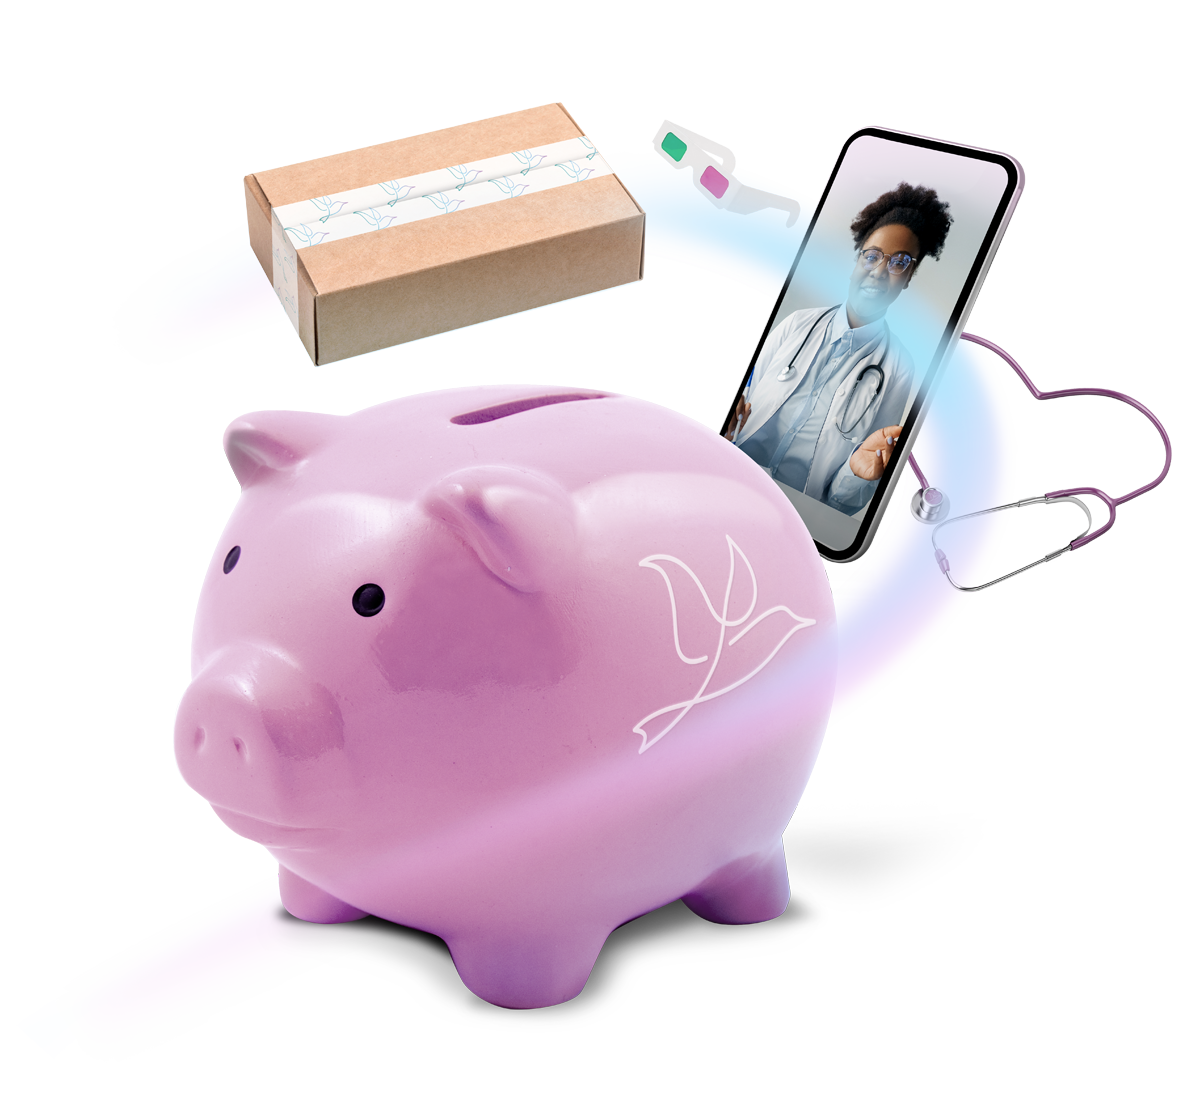 Piggy bank by a smartphone